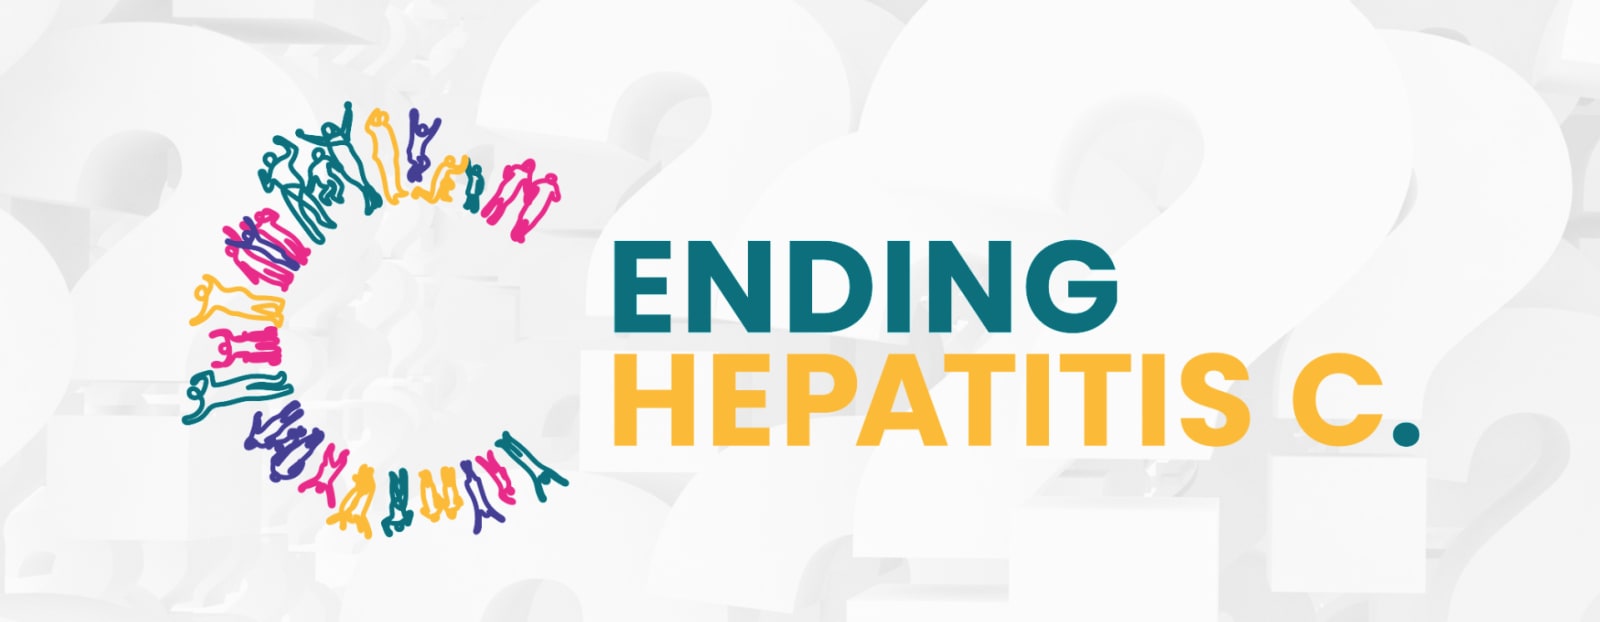 Ending Hepatitis C Campaign